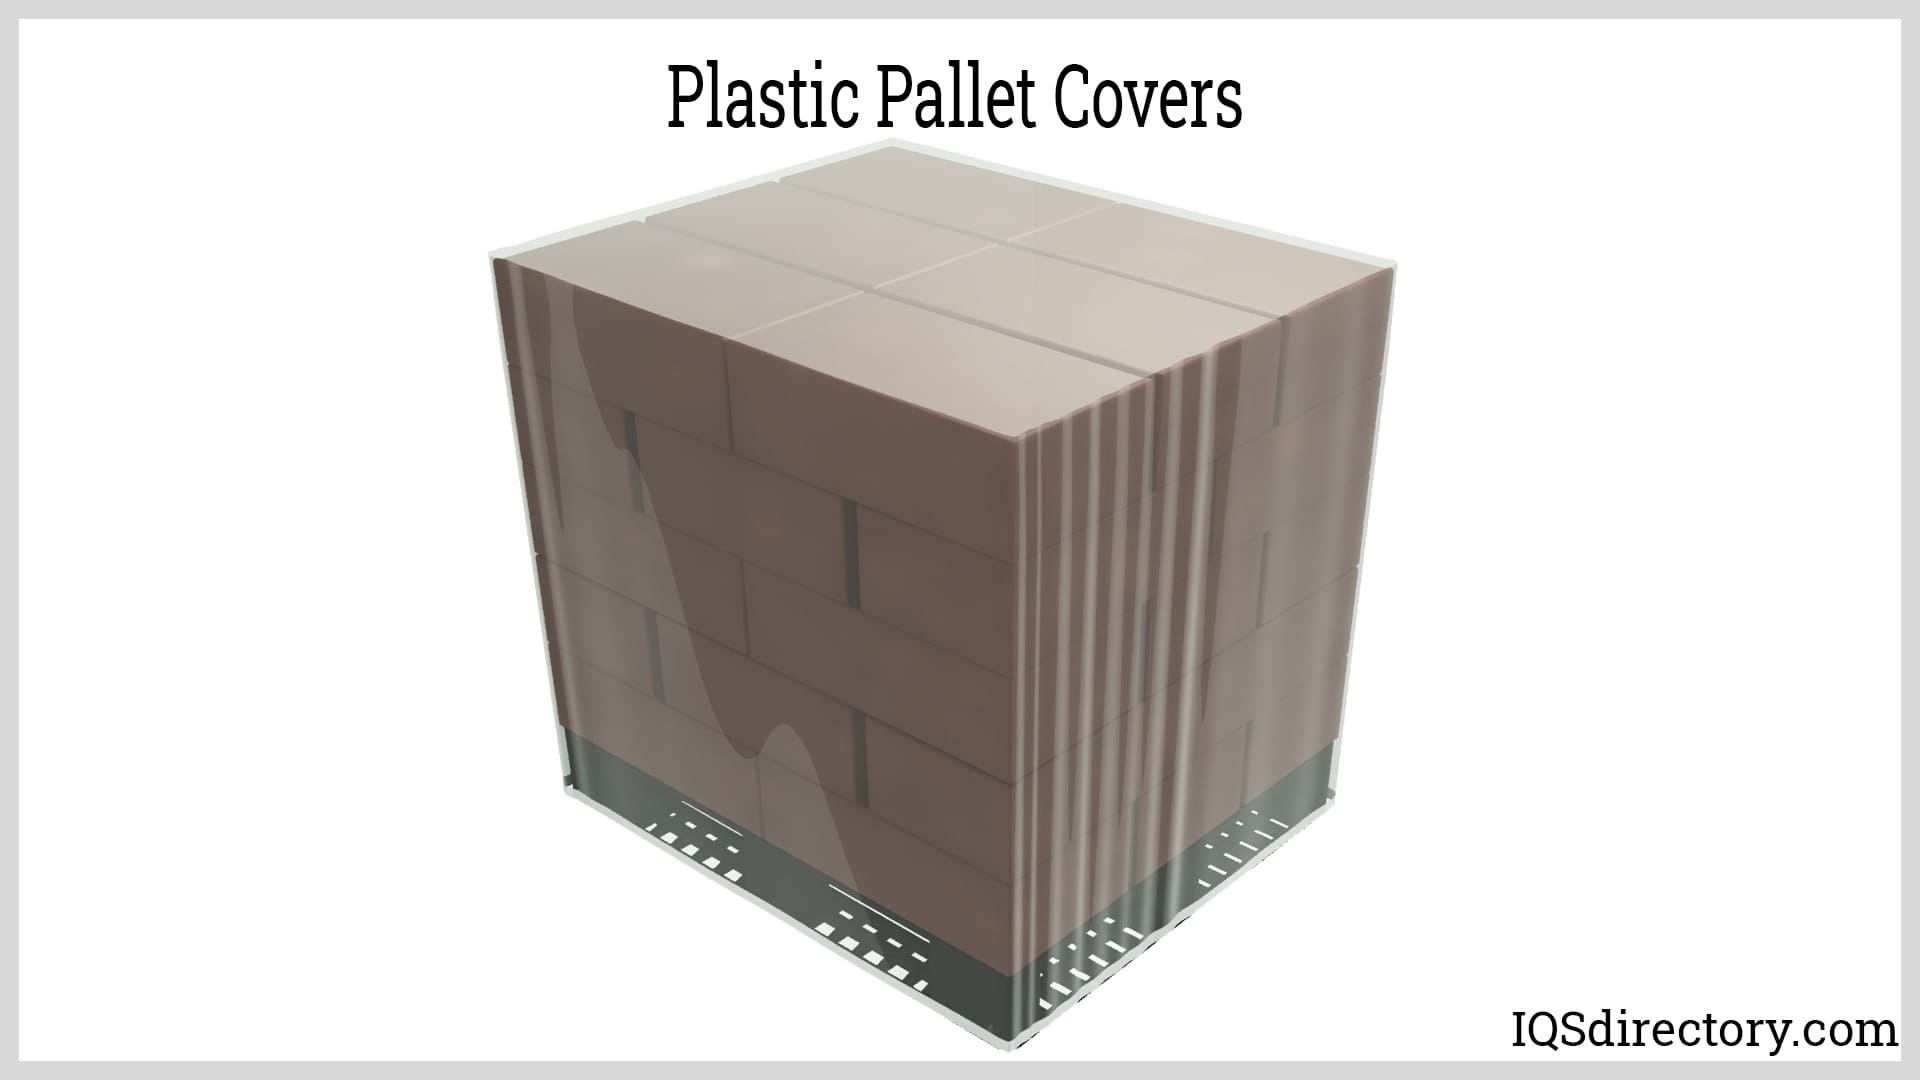 https://www.iqsdirectory.com/articles/plastic-bag/plastic-pallet-covers/plastic-pallet-covers.jpg